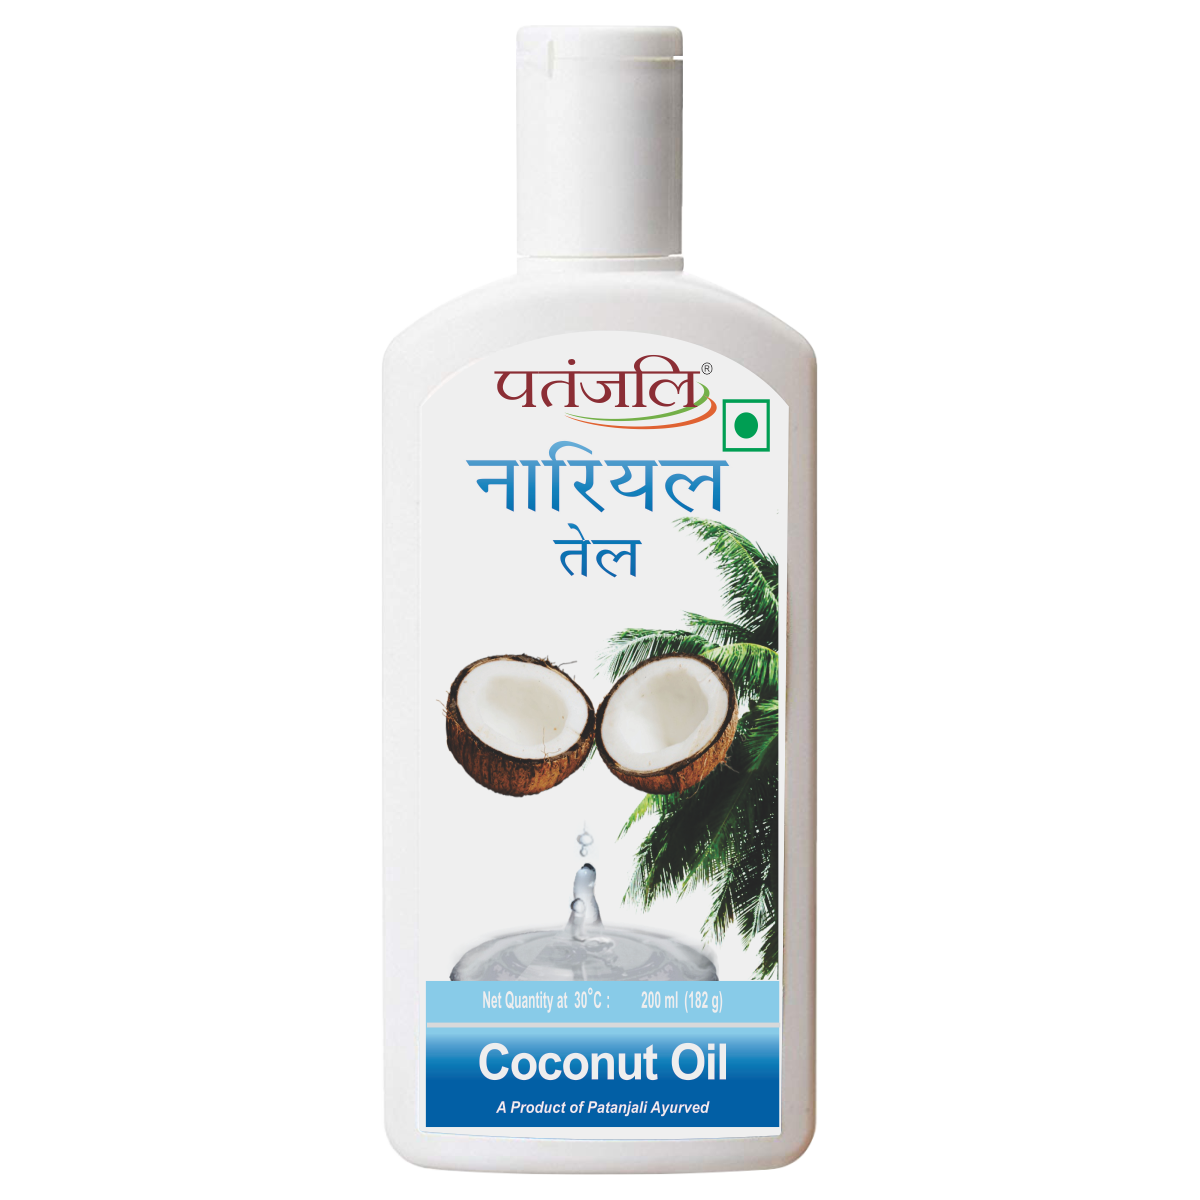 𝐏𝐚𝐭𝐚𝐧𝐣𝐚𝐥𝐢 𝐊𝐞𝐬𝐡 𝐊𝐚𝐧𝐭𝐢 𝐇𝐚𝐢𝐫 𝐎𝐢𝐥 𝐀𝐯𝐚𝐢𝐥𝐚𝐛𝐥𝐞  🍀 Patanjali Ayurvedic Kesh Kanti Hair Oil provides deep nourishment and  strengthens hair roots, reduces hair... | By Patanjali Mauritius | Facebook